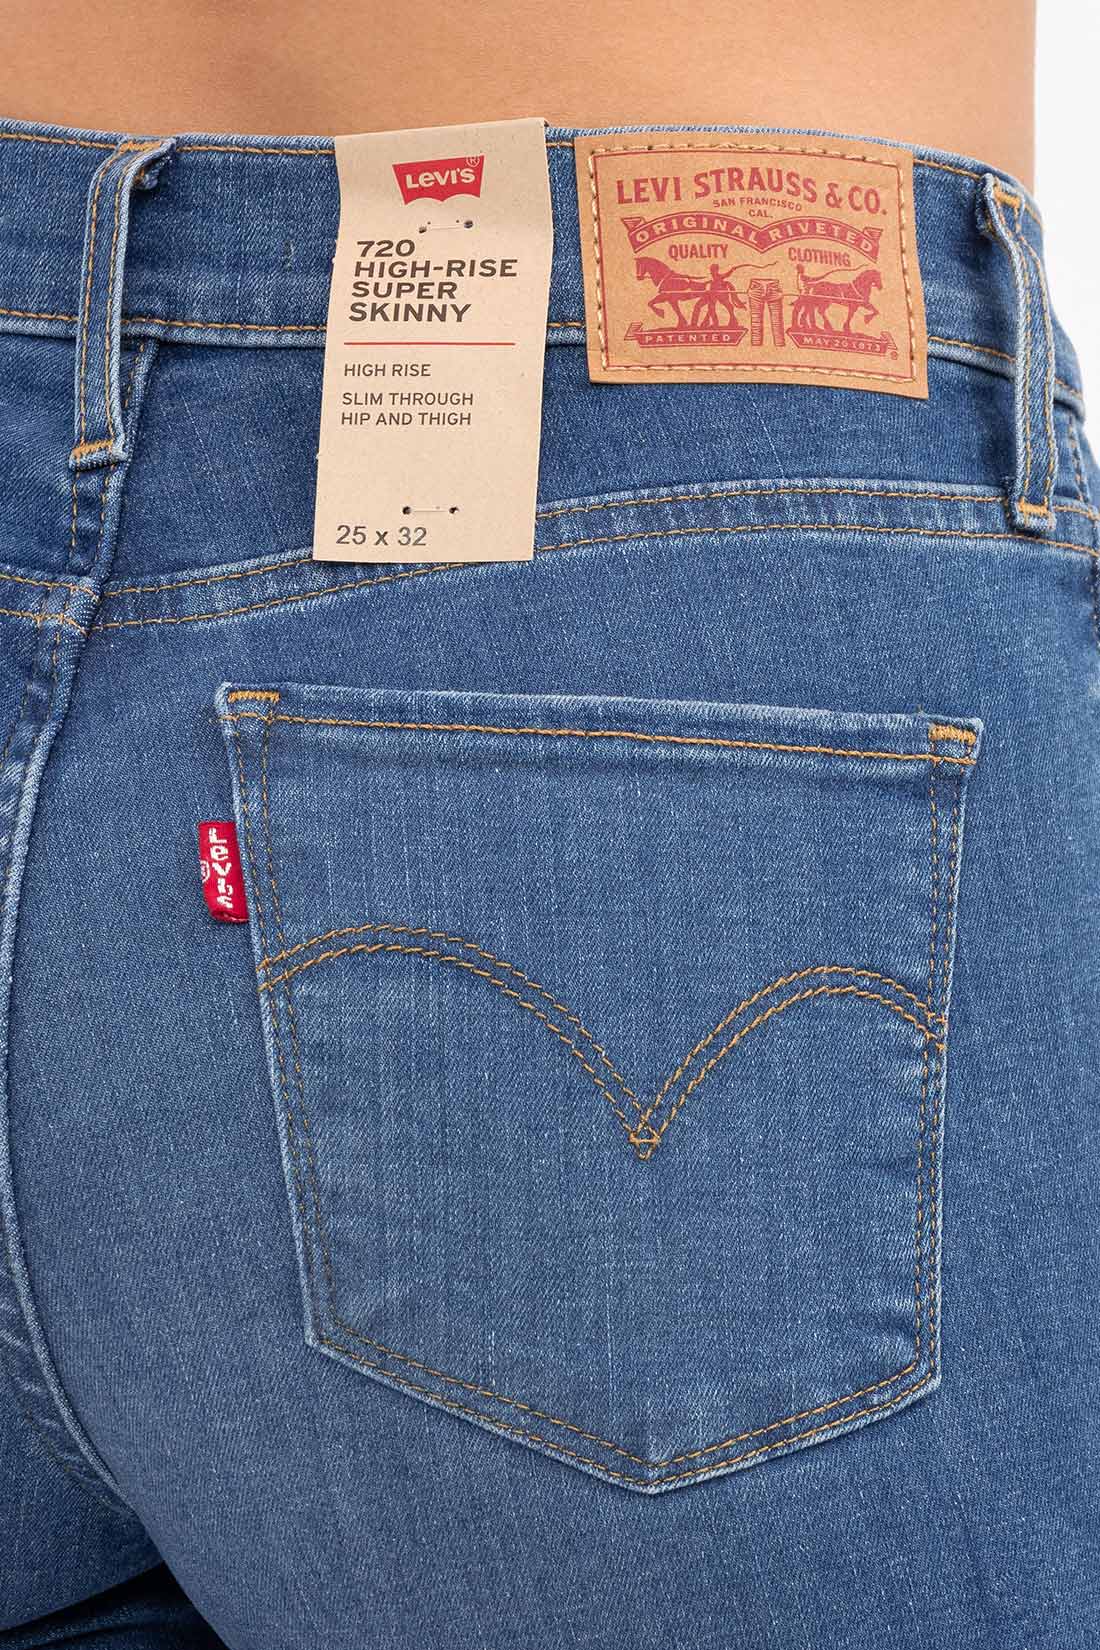 Calca Jeans Levis 720 High Rise Super Skinny Rasgo